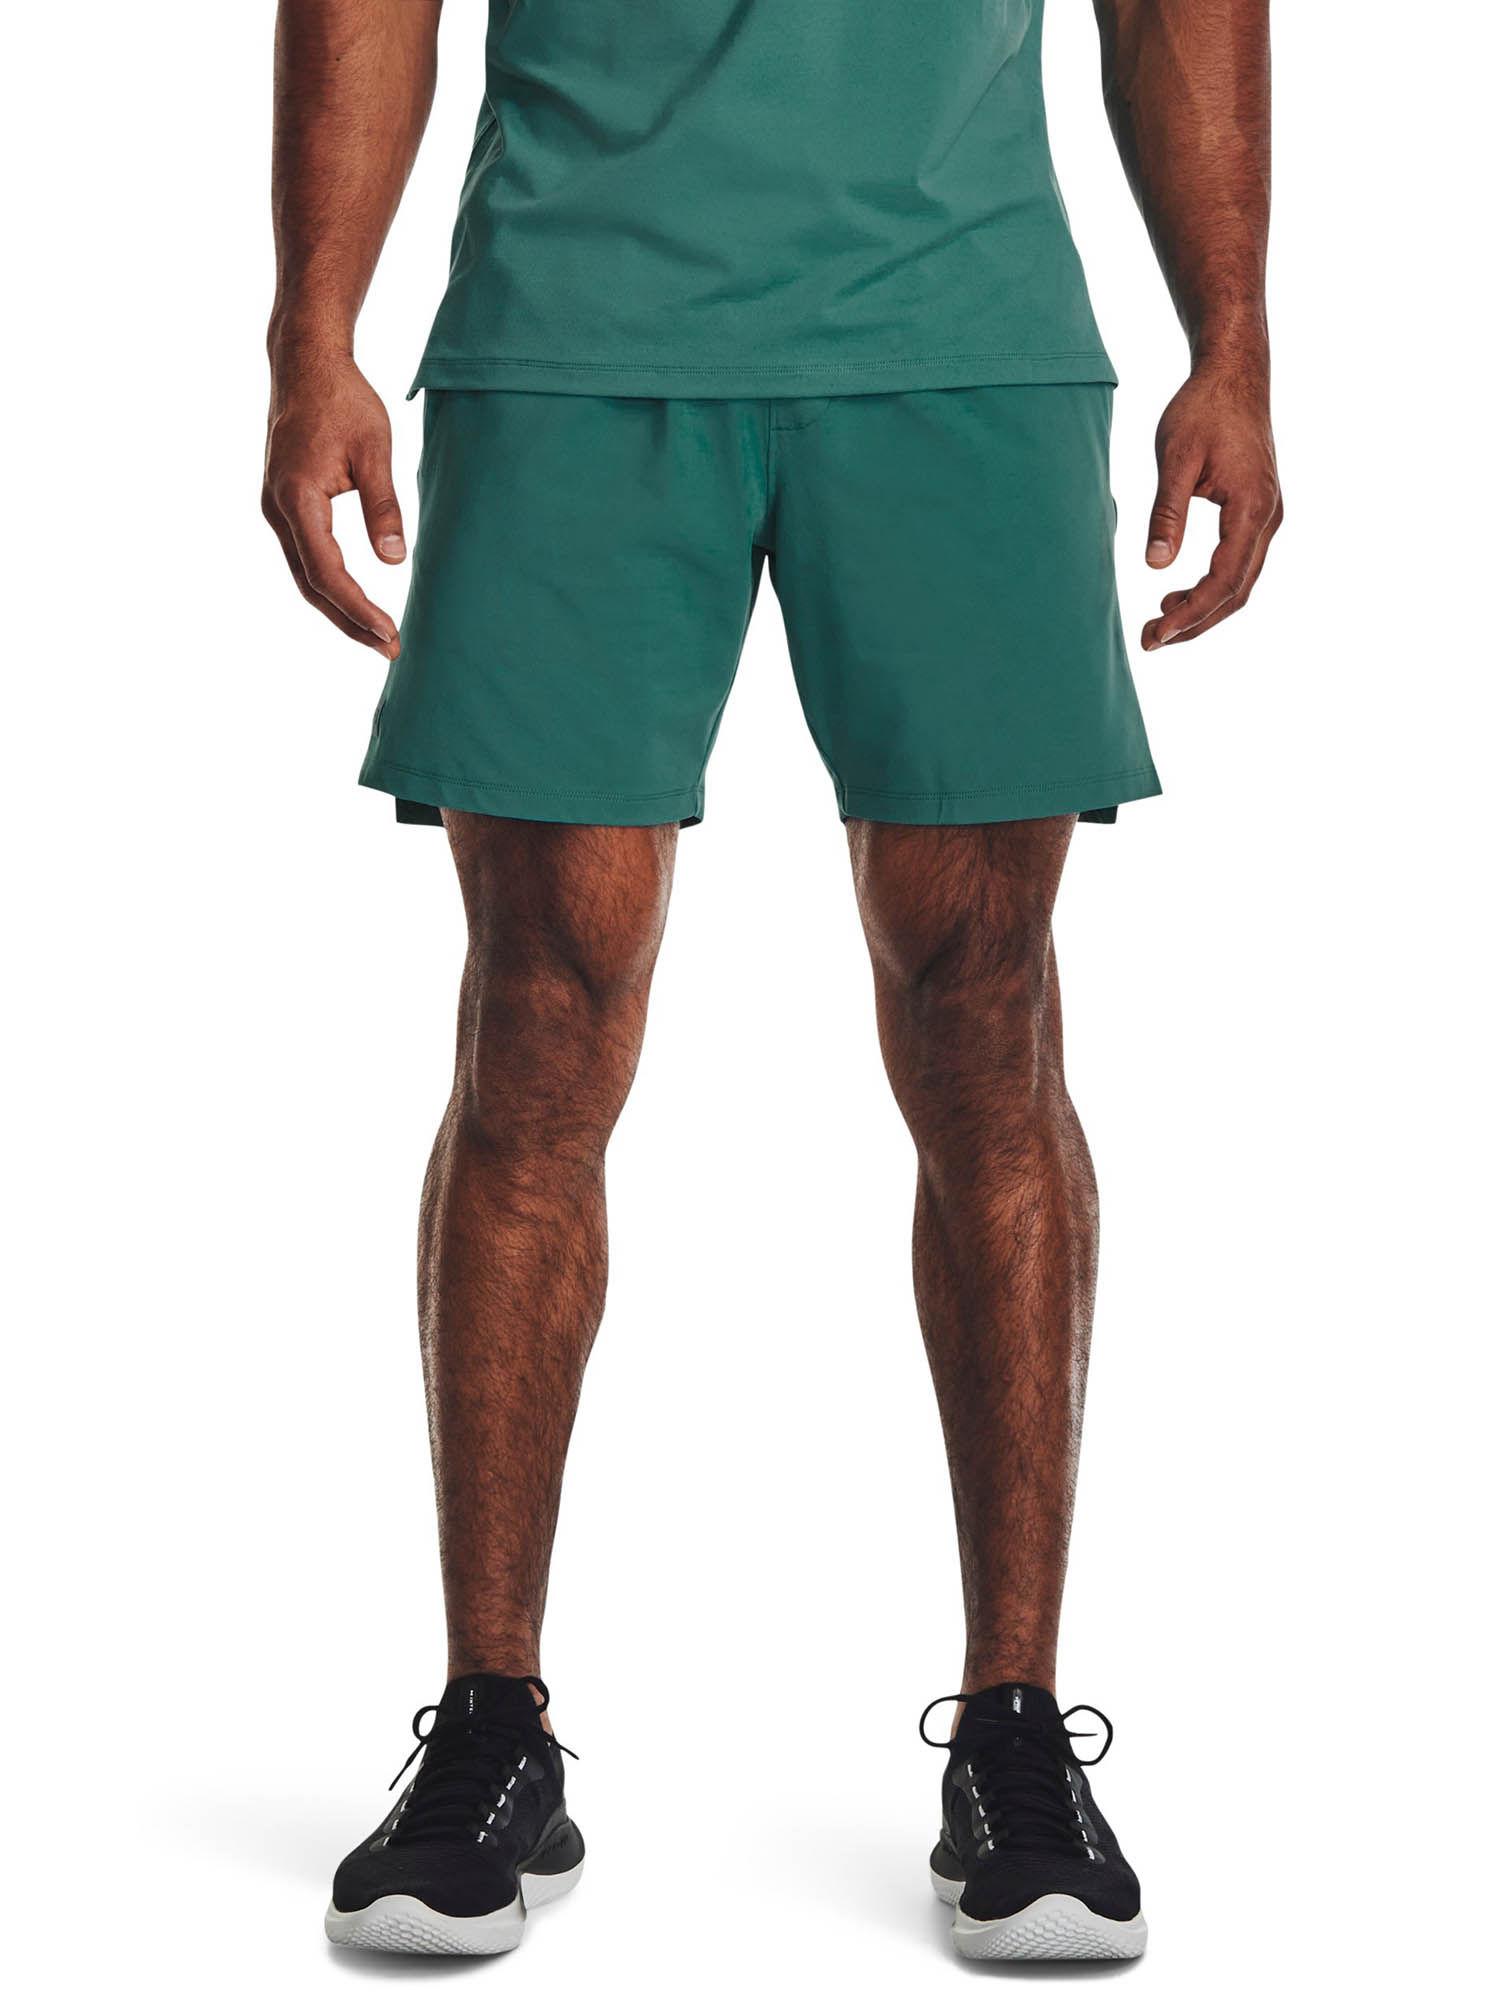 meridian shorts-green